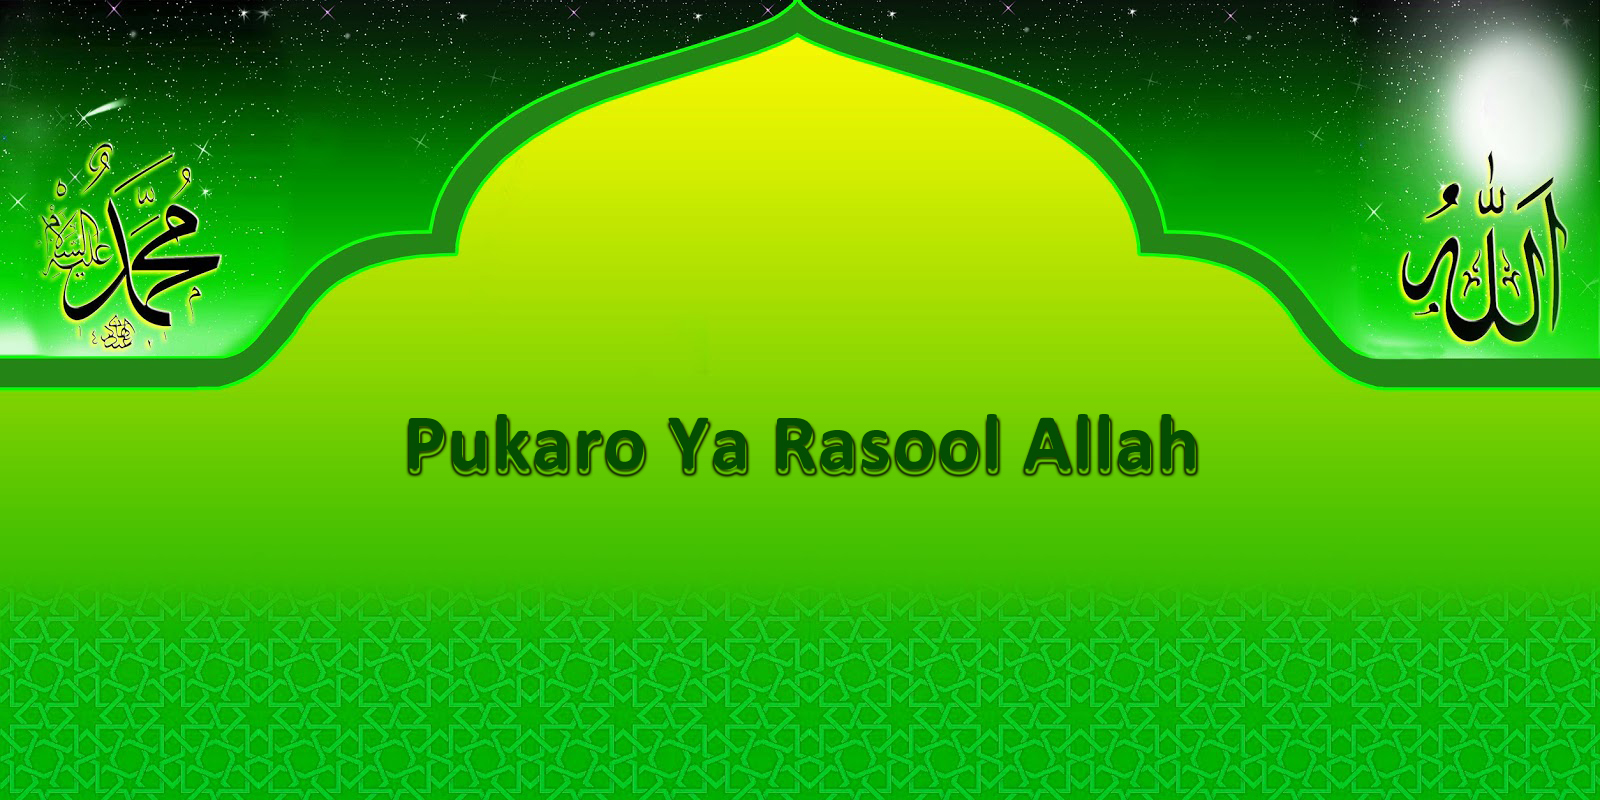 Sufi Fm Ali Naats Pukaro Ya Rasool Allah Jashn e amad e rasool… jashne amade rasool… sufi fm ali naats pukaro ya rasool allah